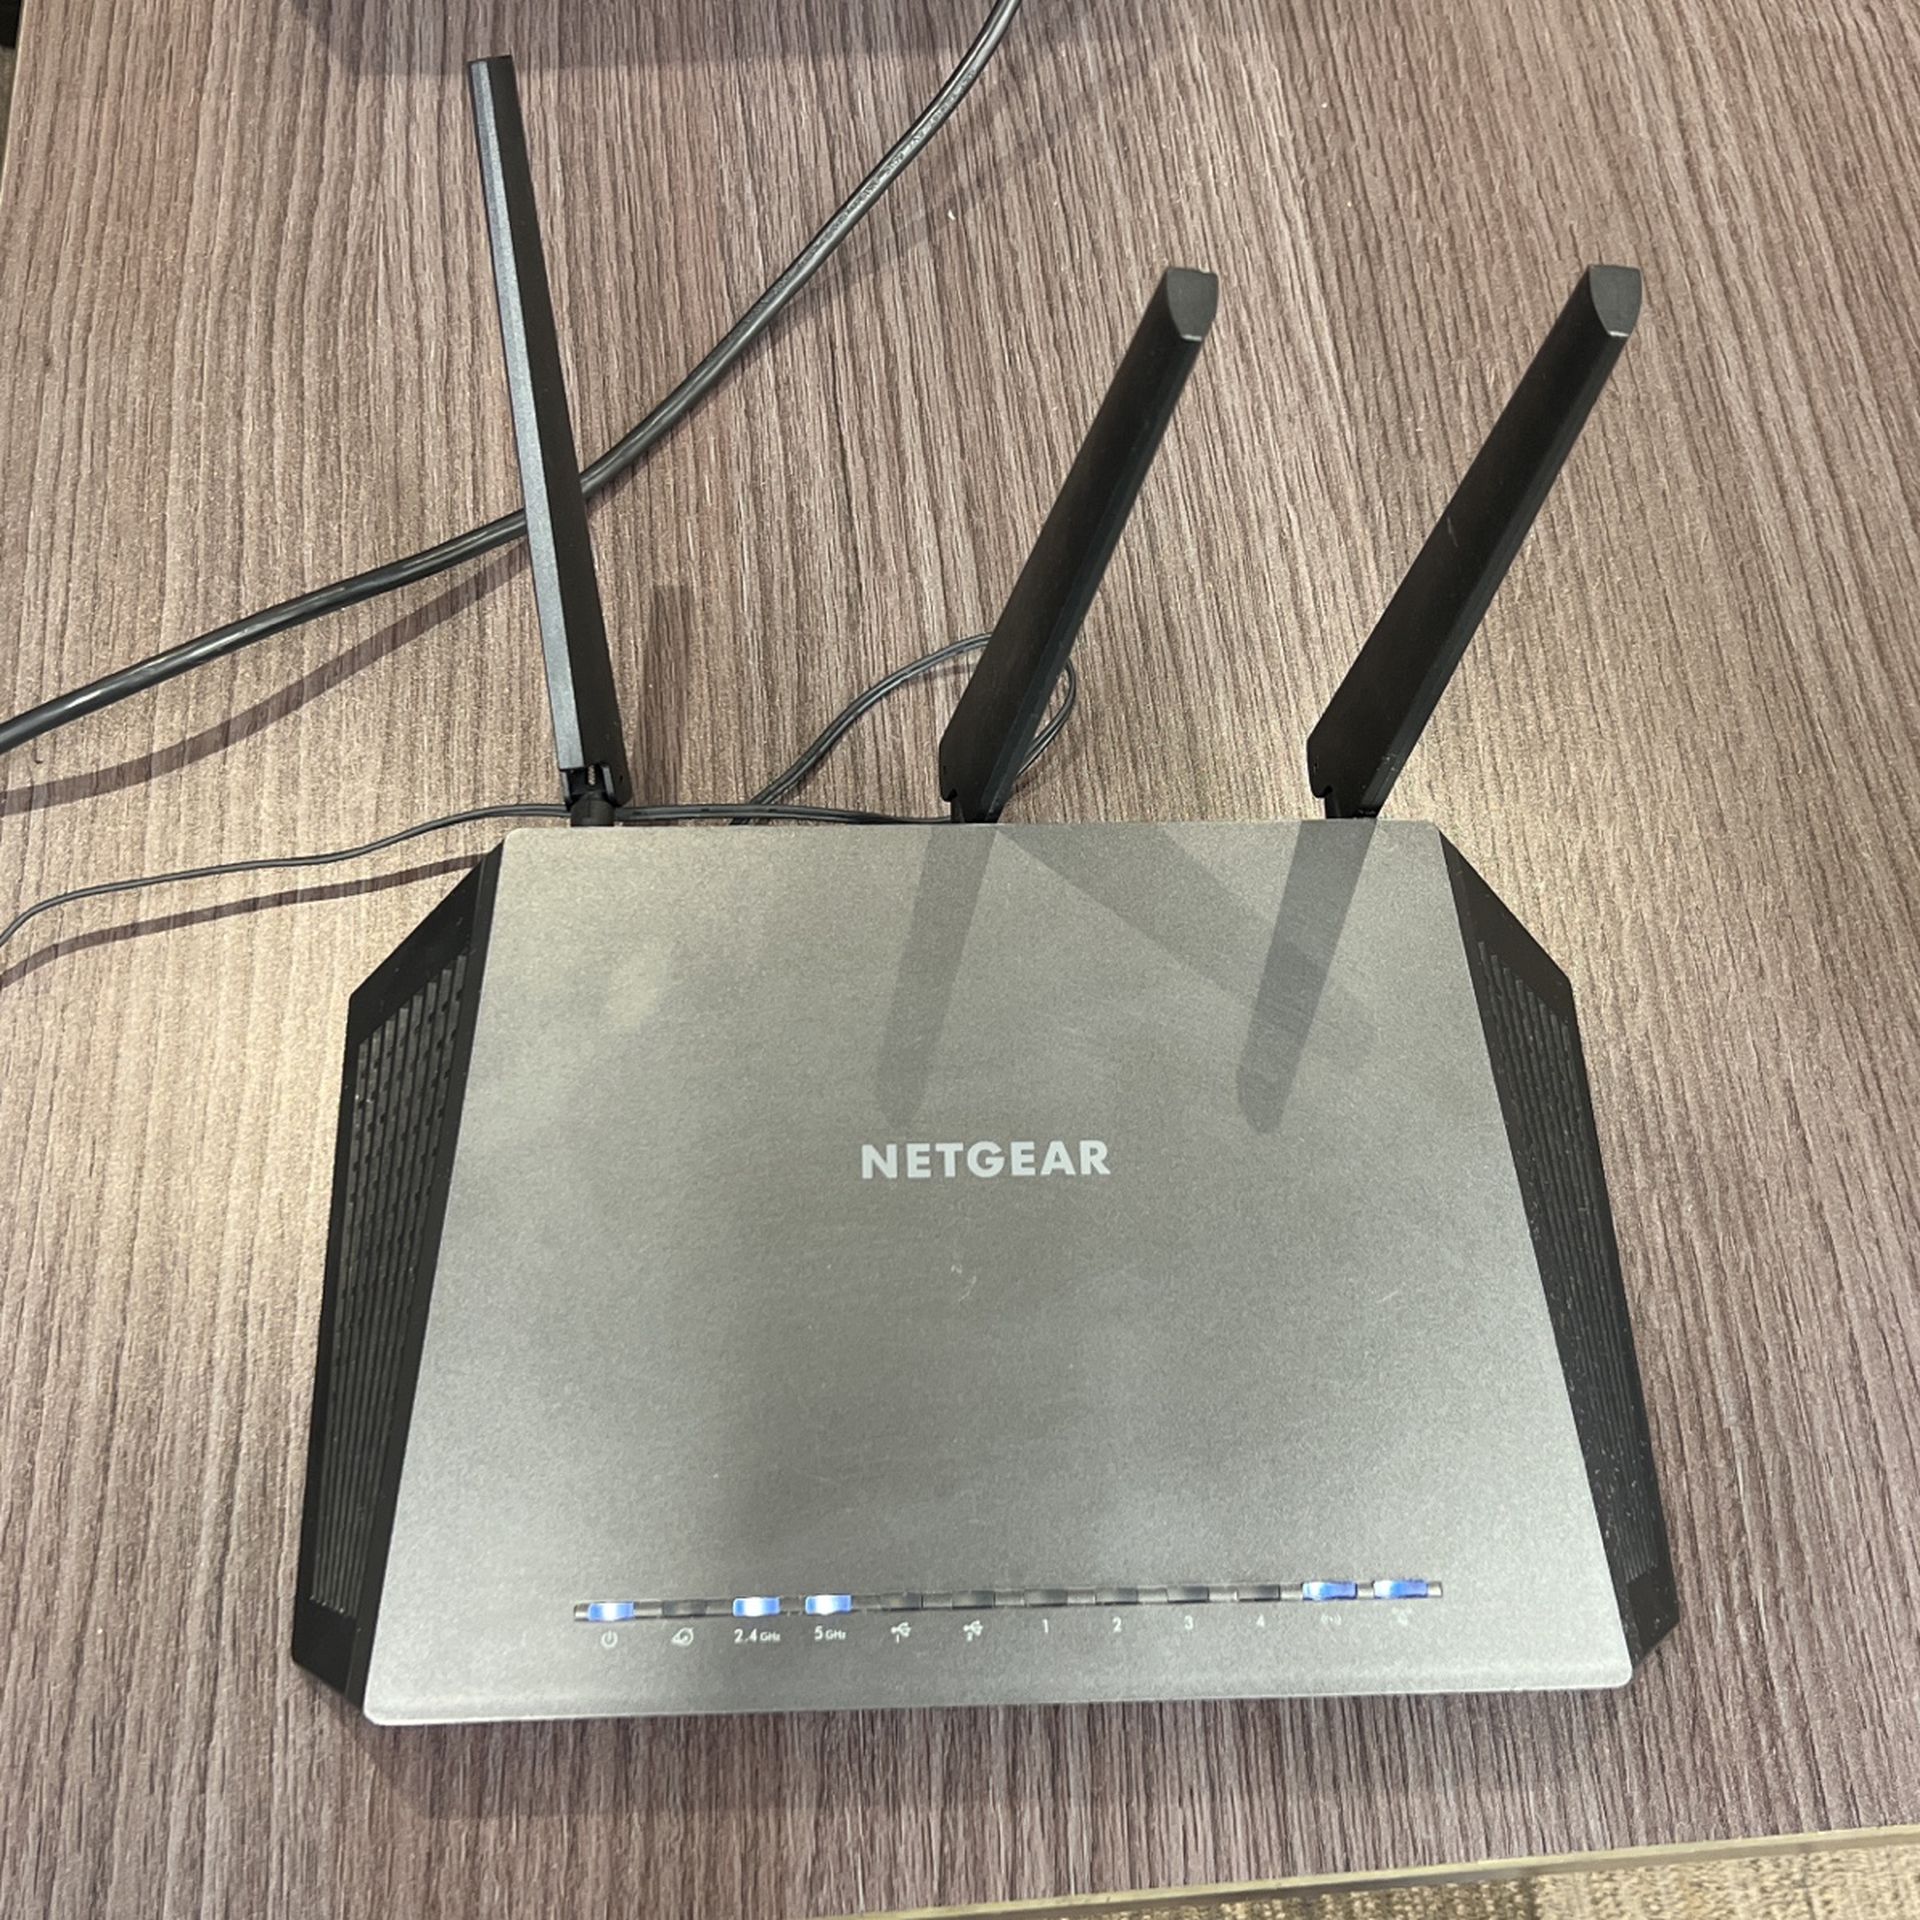 Net gear Nighthawk R7000 Gaming Router